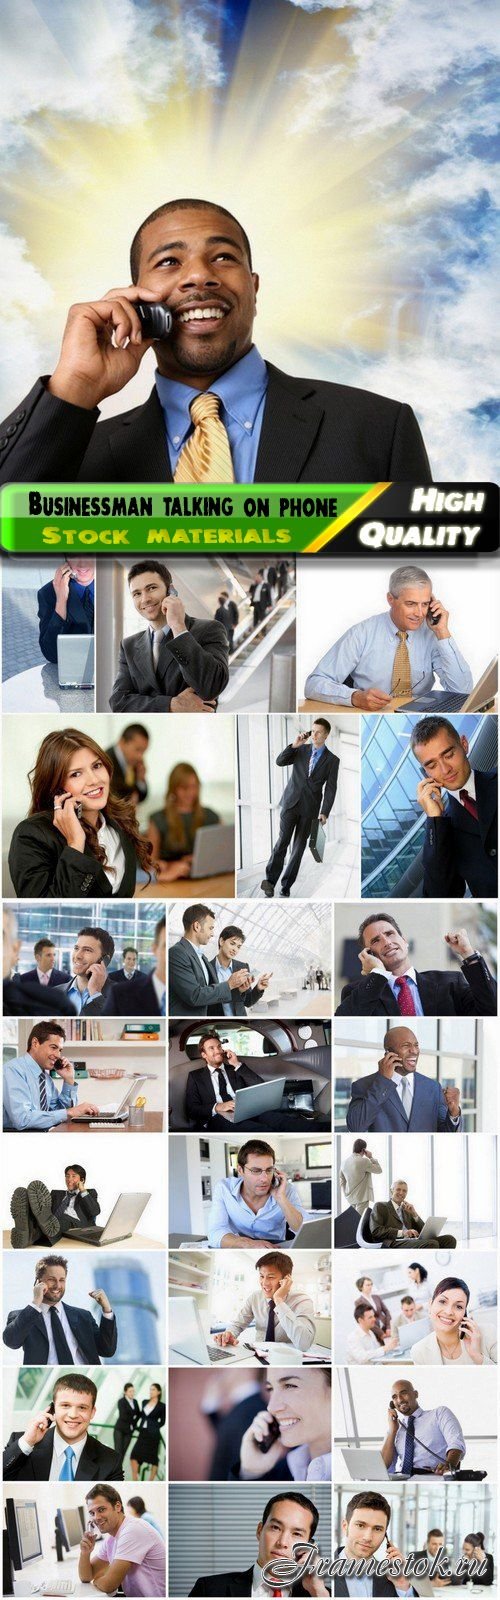 Businessman in formal suit talking on smartphone or mobile phone - 25 HQ Jpg